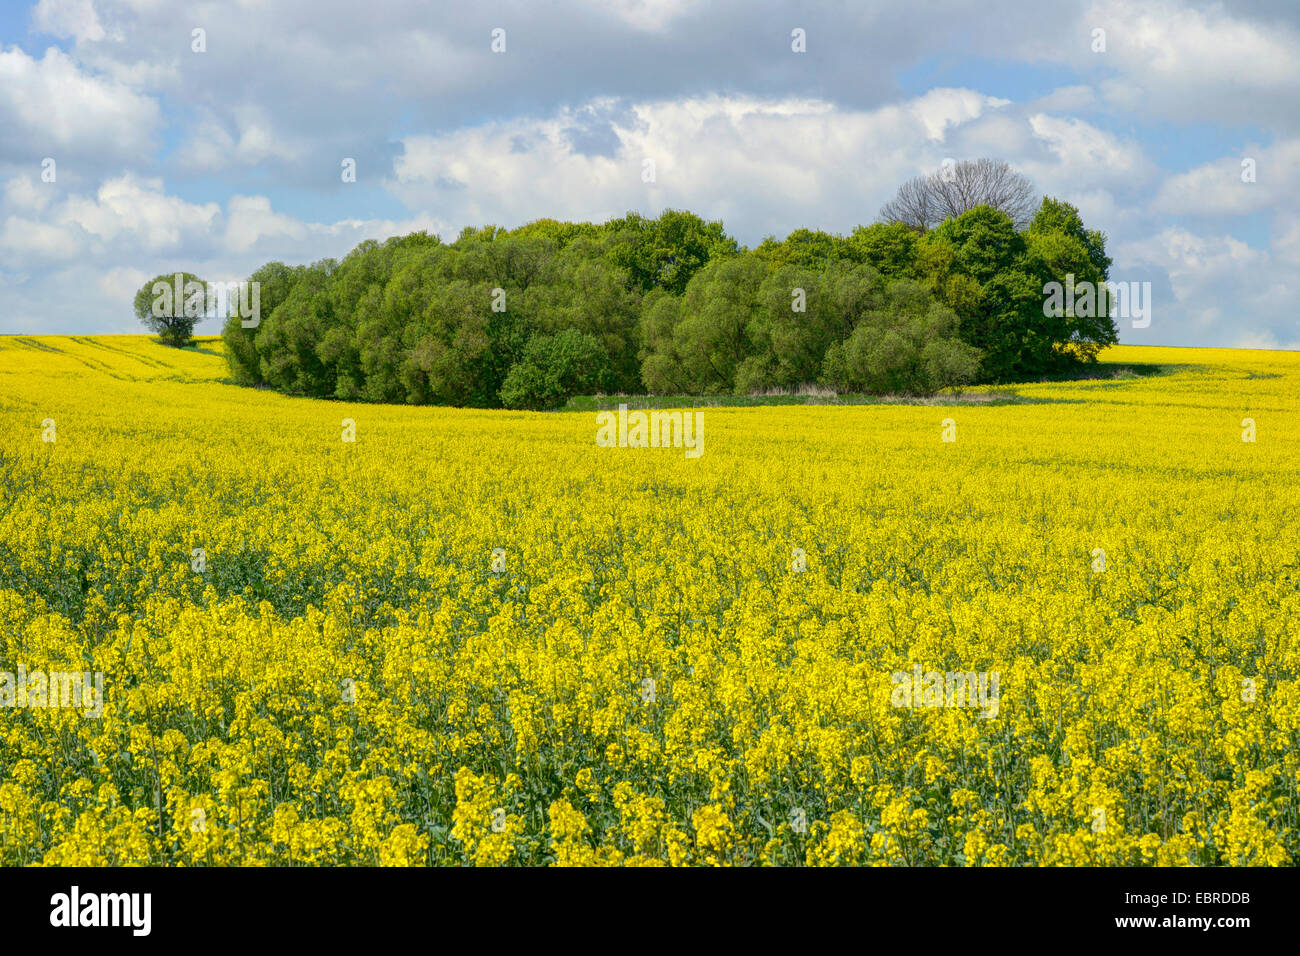 rape, turnip (Brassica napus), flowering rape field with groves, Germany, Hesse, Hessisches Bergland Stock Photo